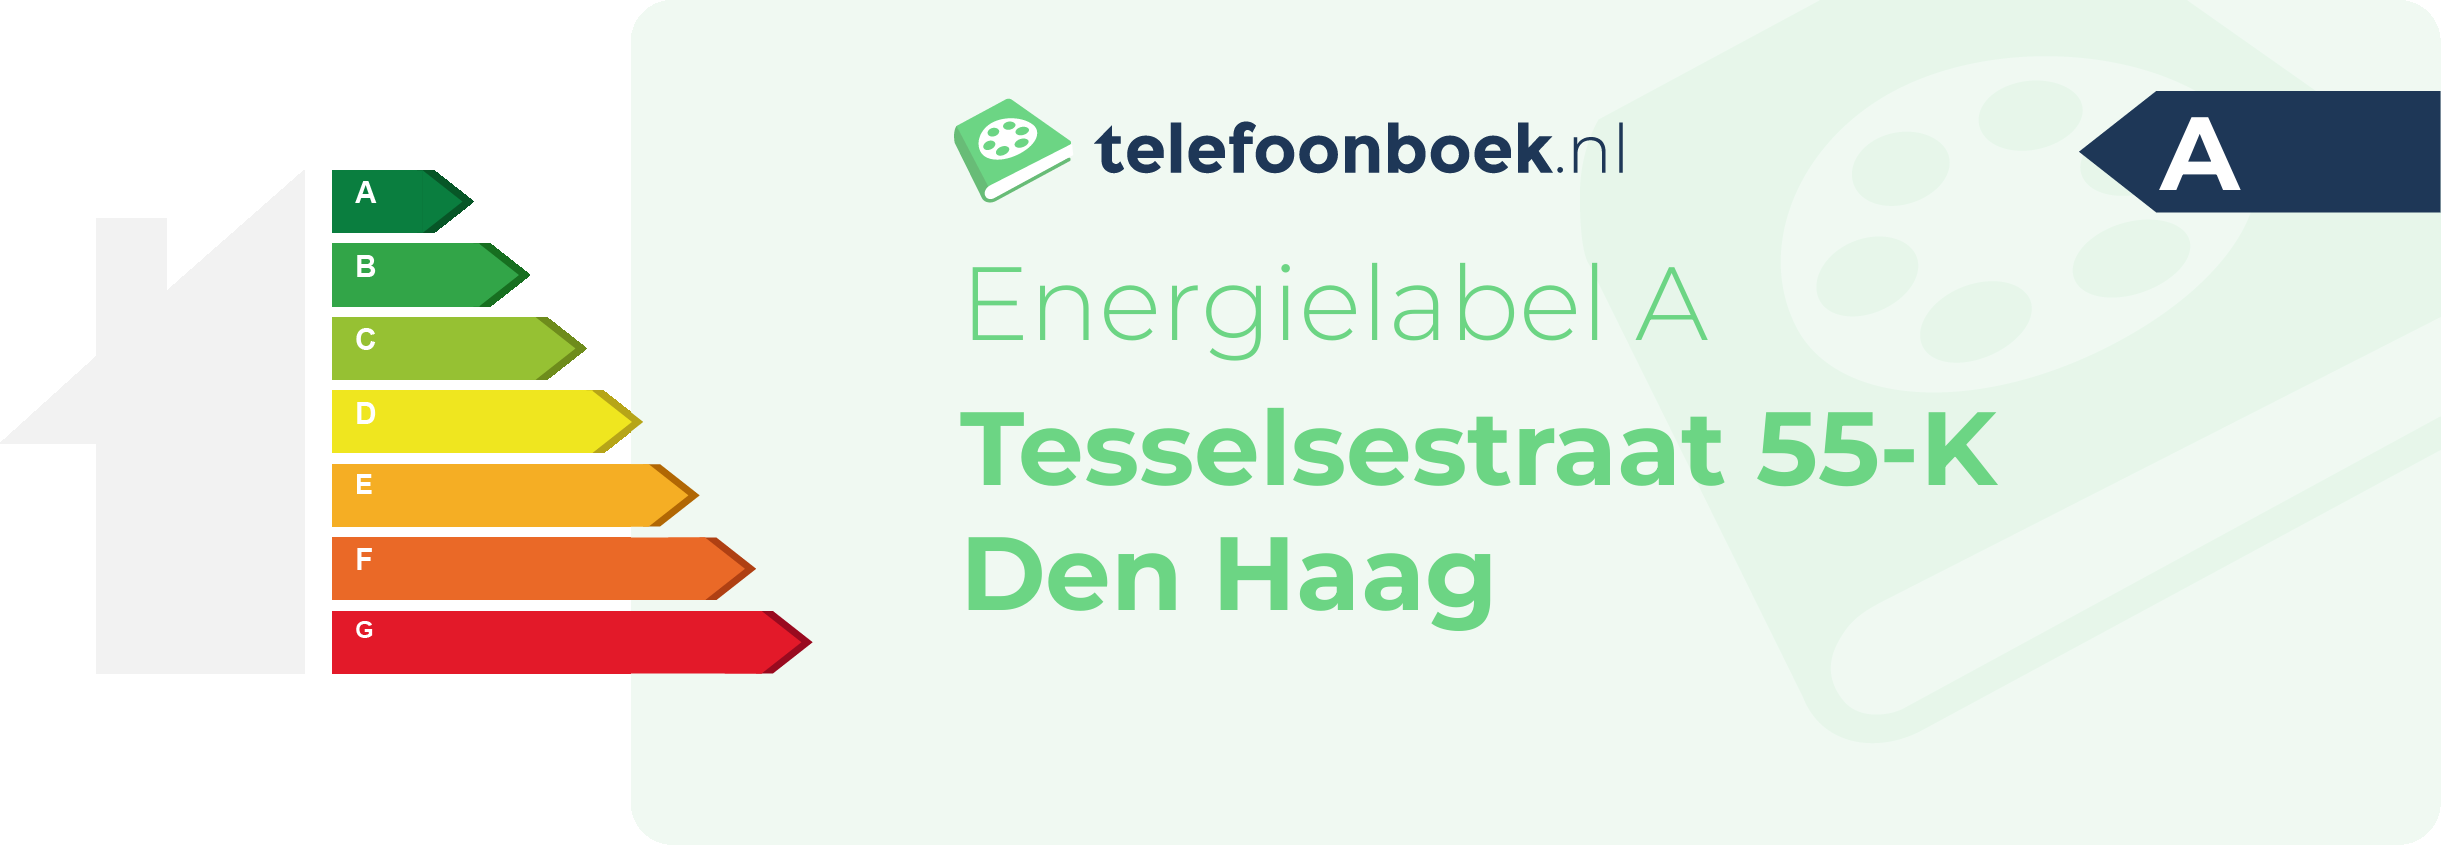 Energielabel Tesselsestraat 55-K Den Haag